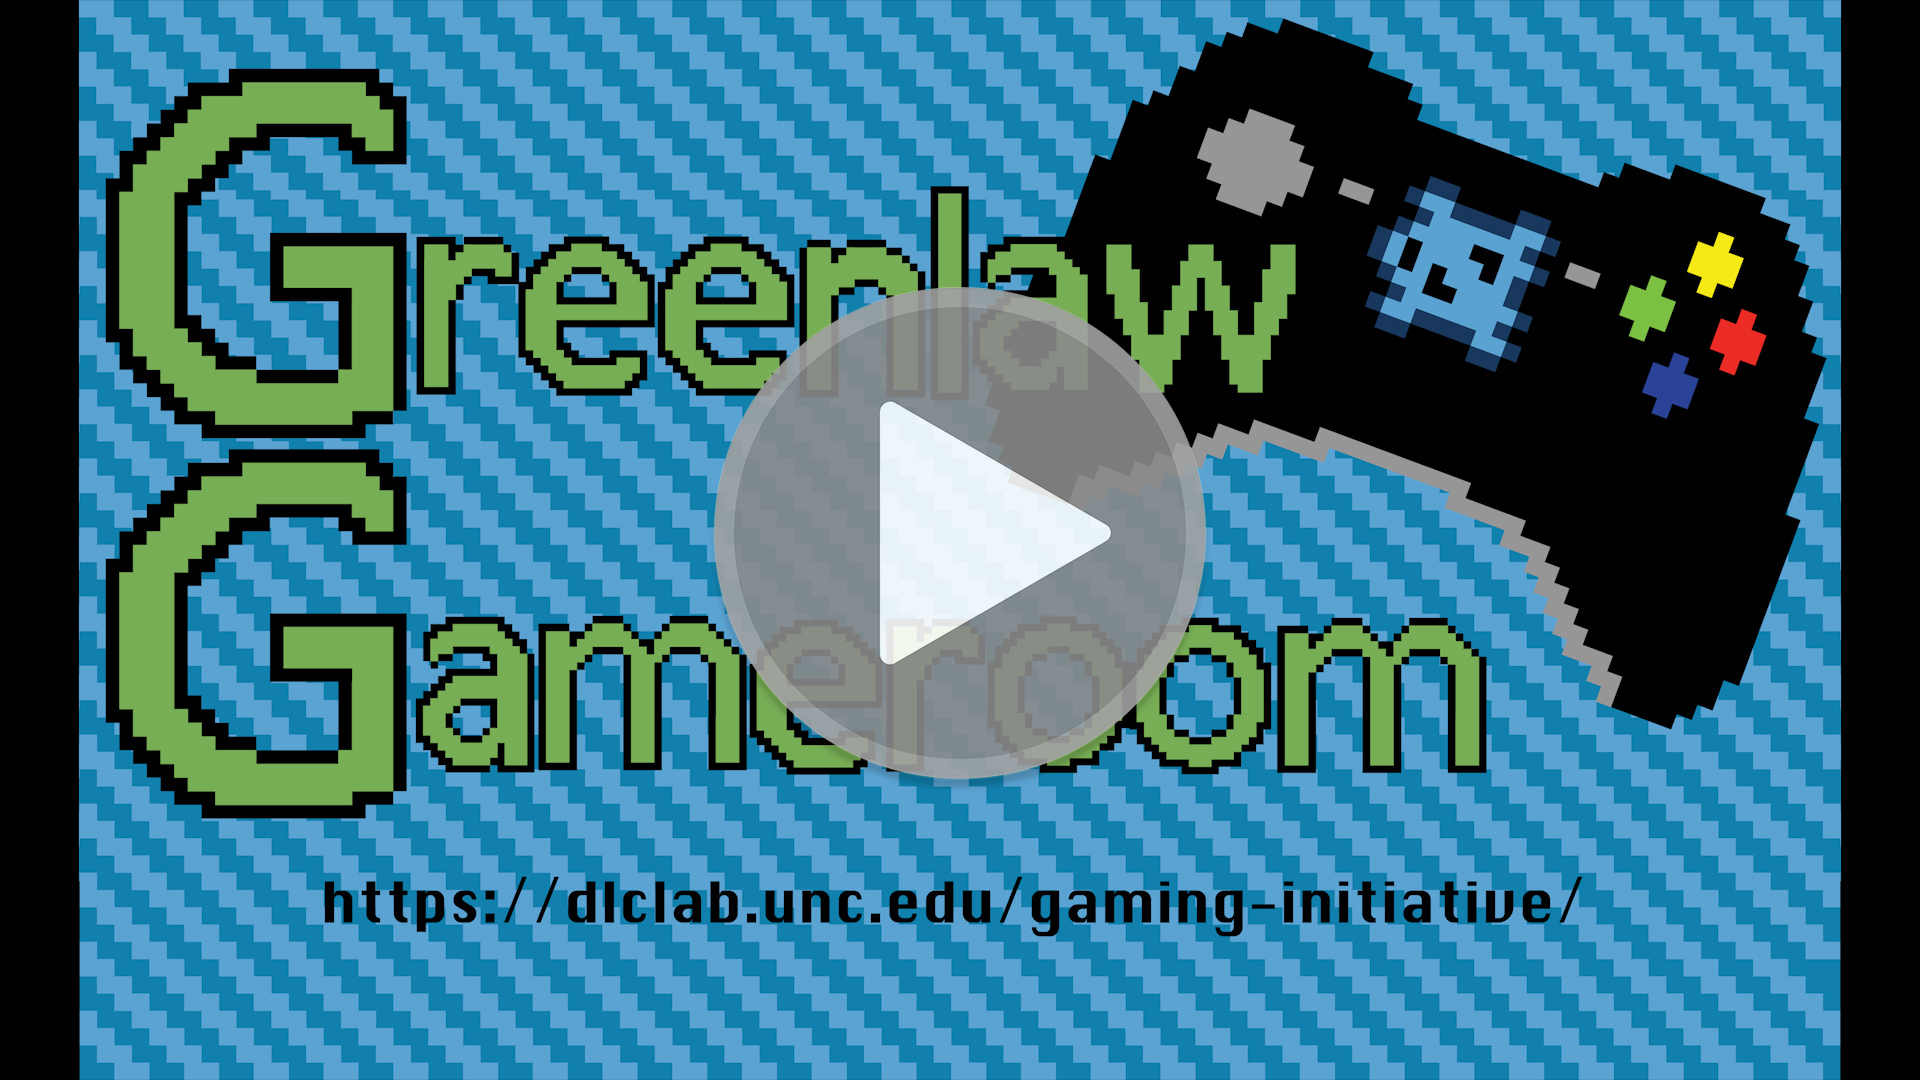 Greenlaw Gameroom Promotional Video